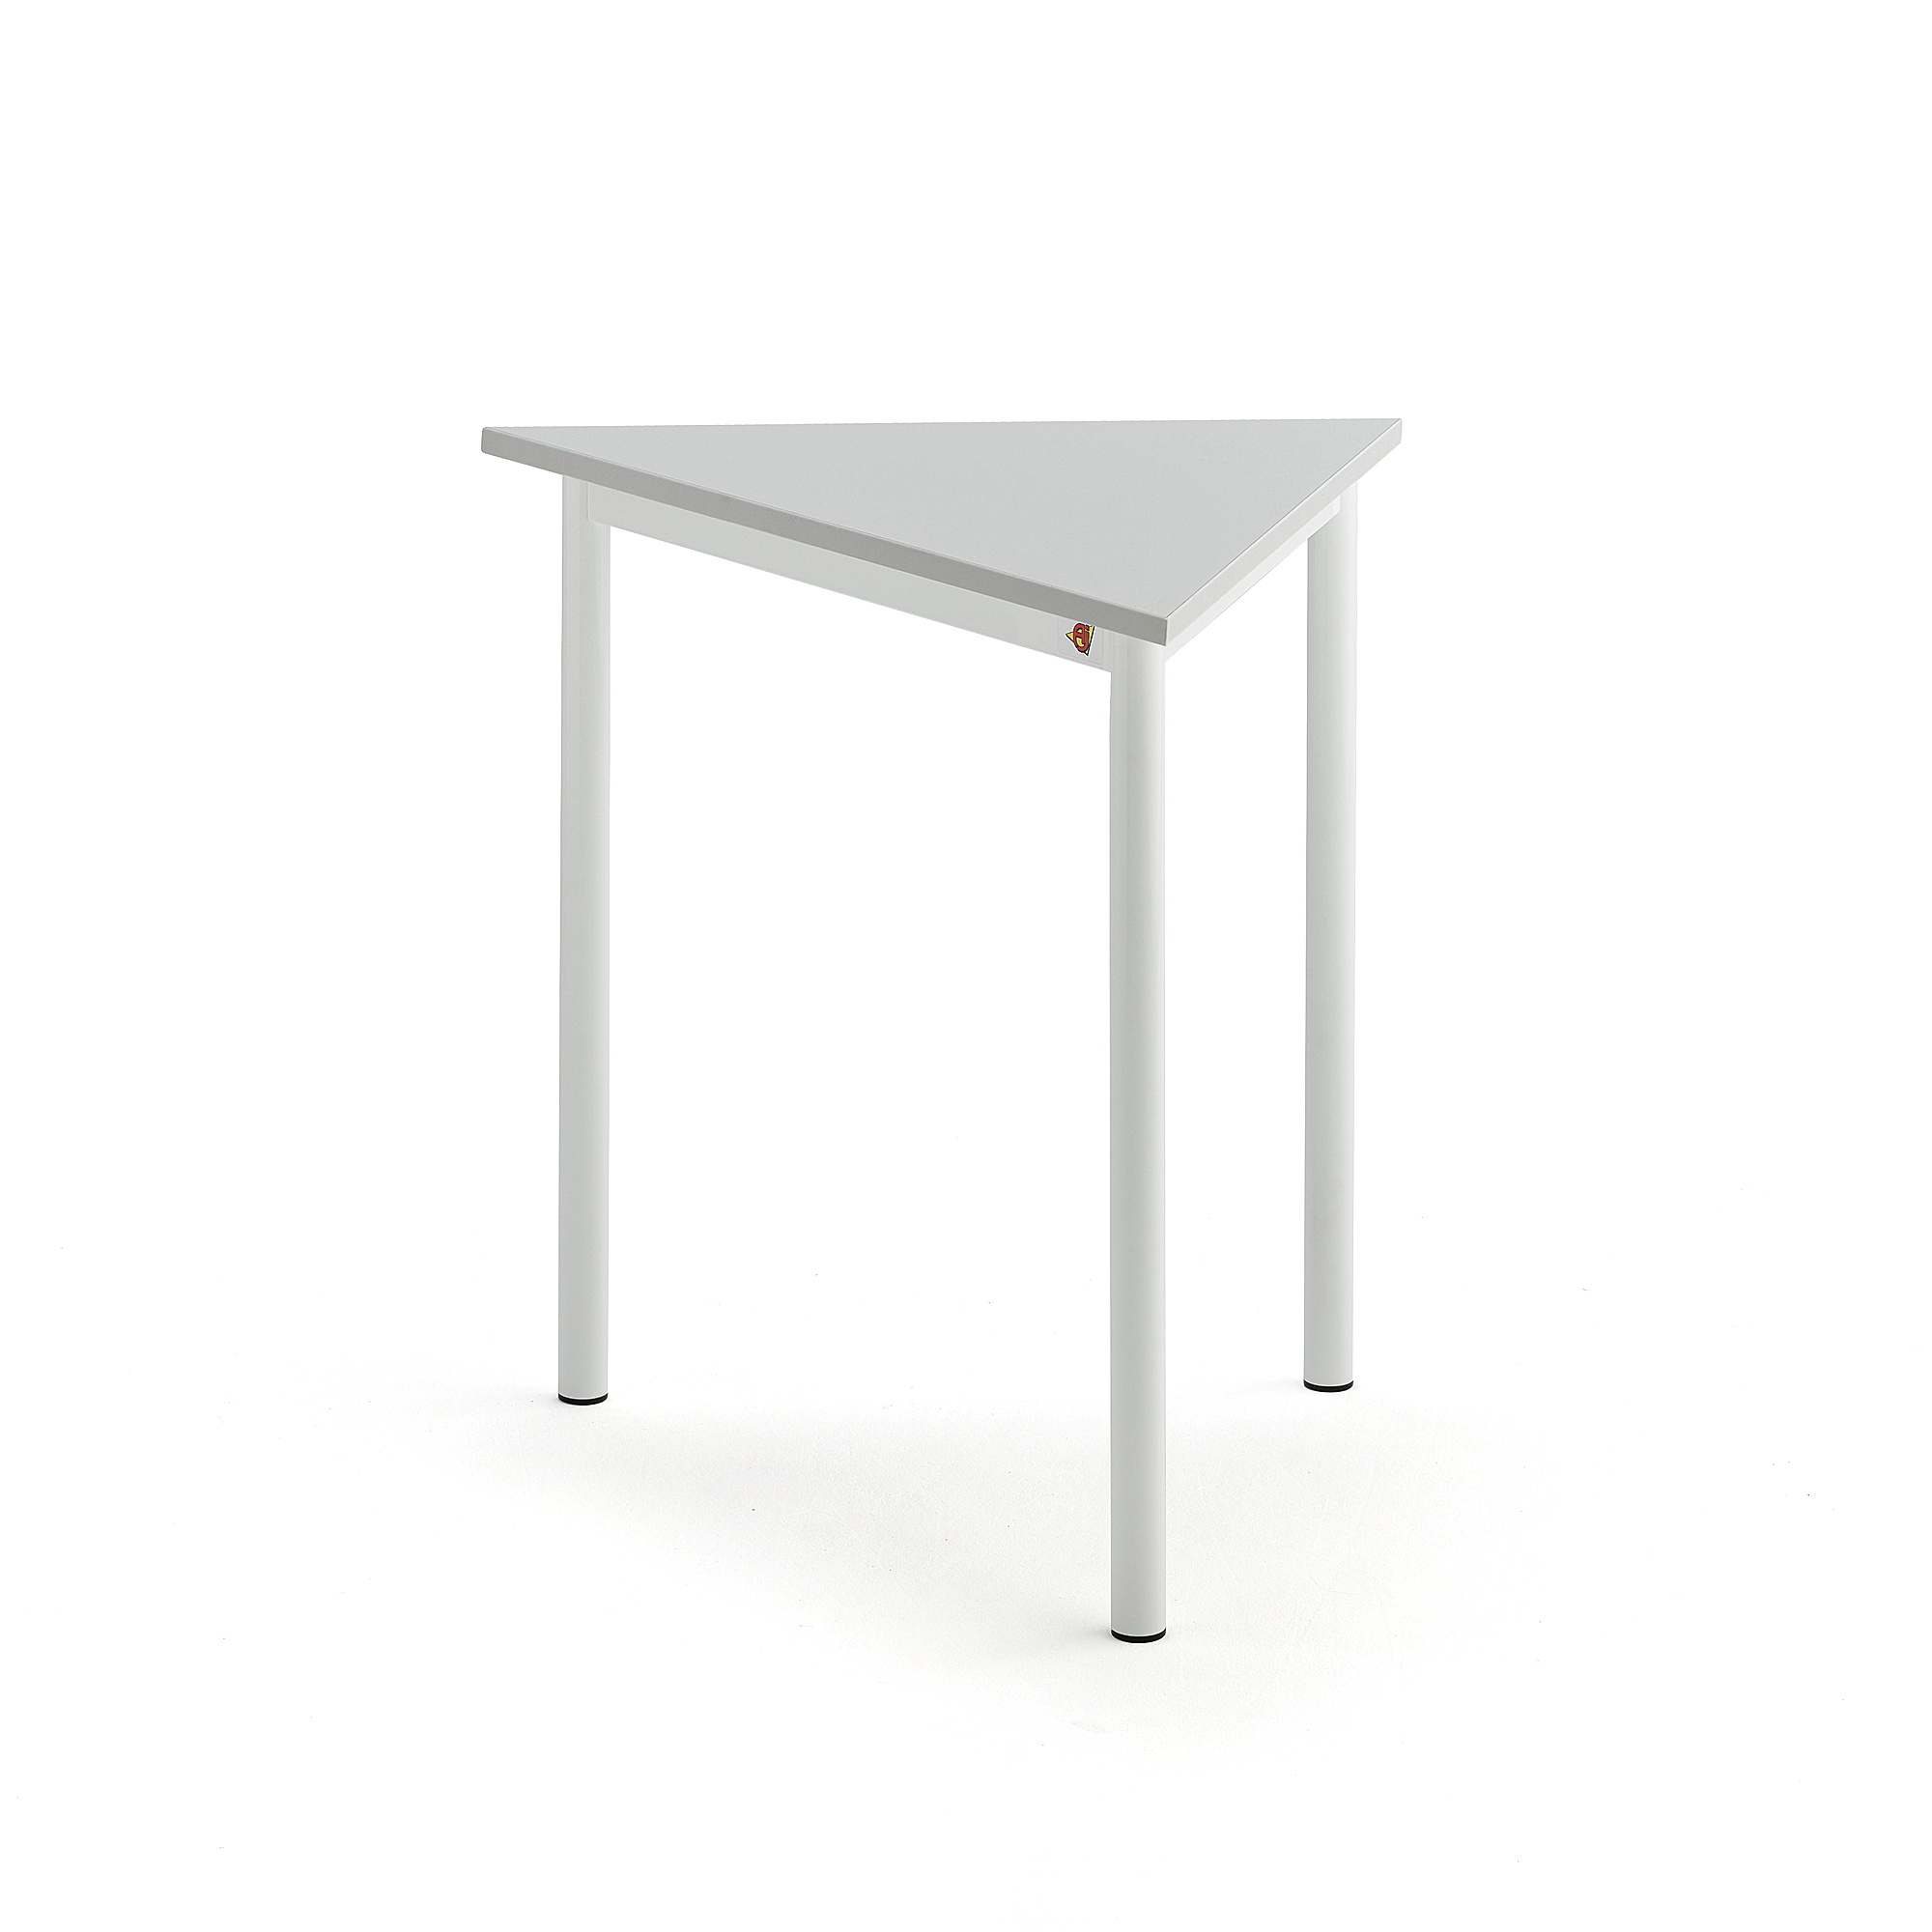 Stůl SONITUS TRIANGEL, 800x700x720 mm, bílé nohy, HPL deska tlumící hluk, šedá